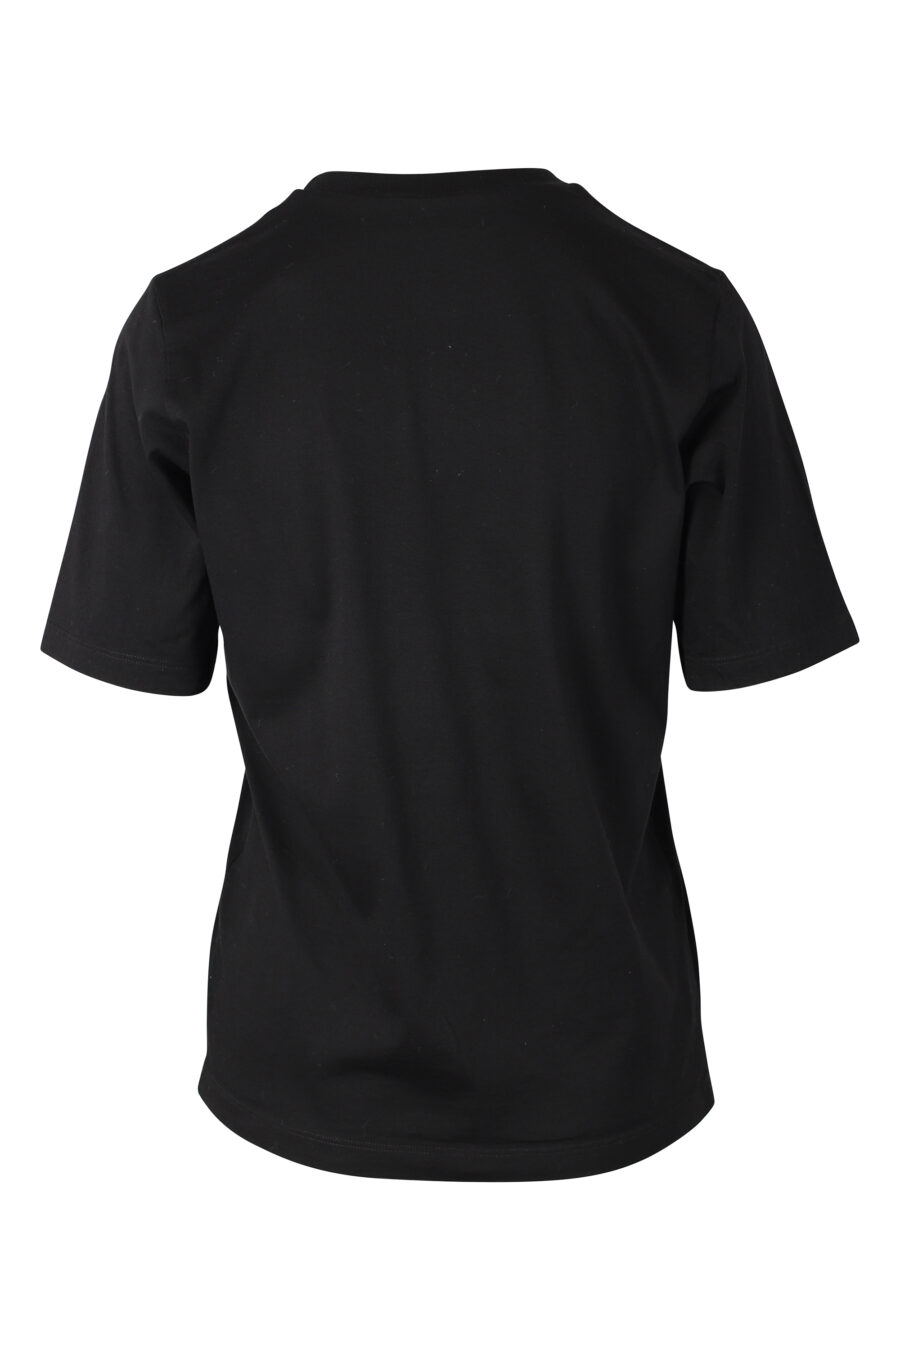 T-shirt preta com duplo logótipo "icon sunset" - IMG 9784